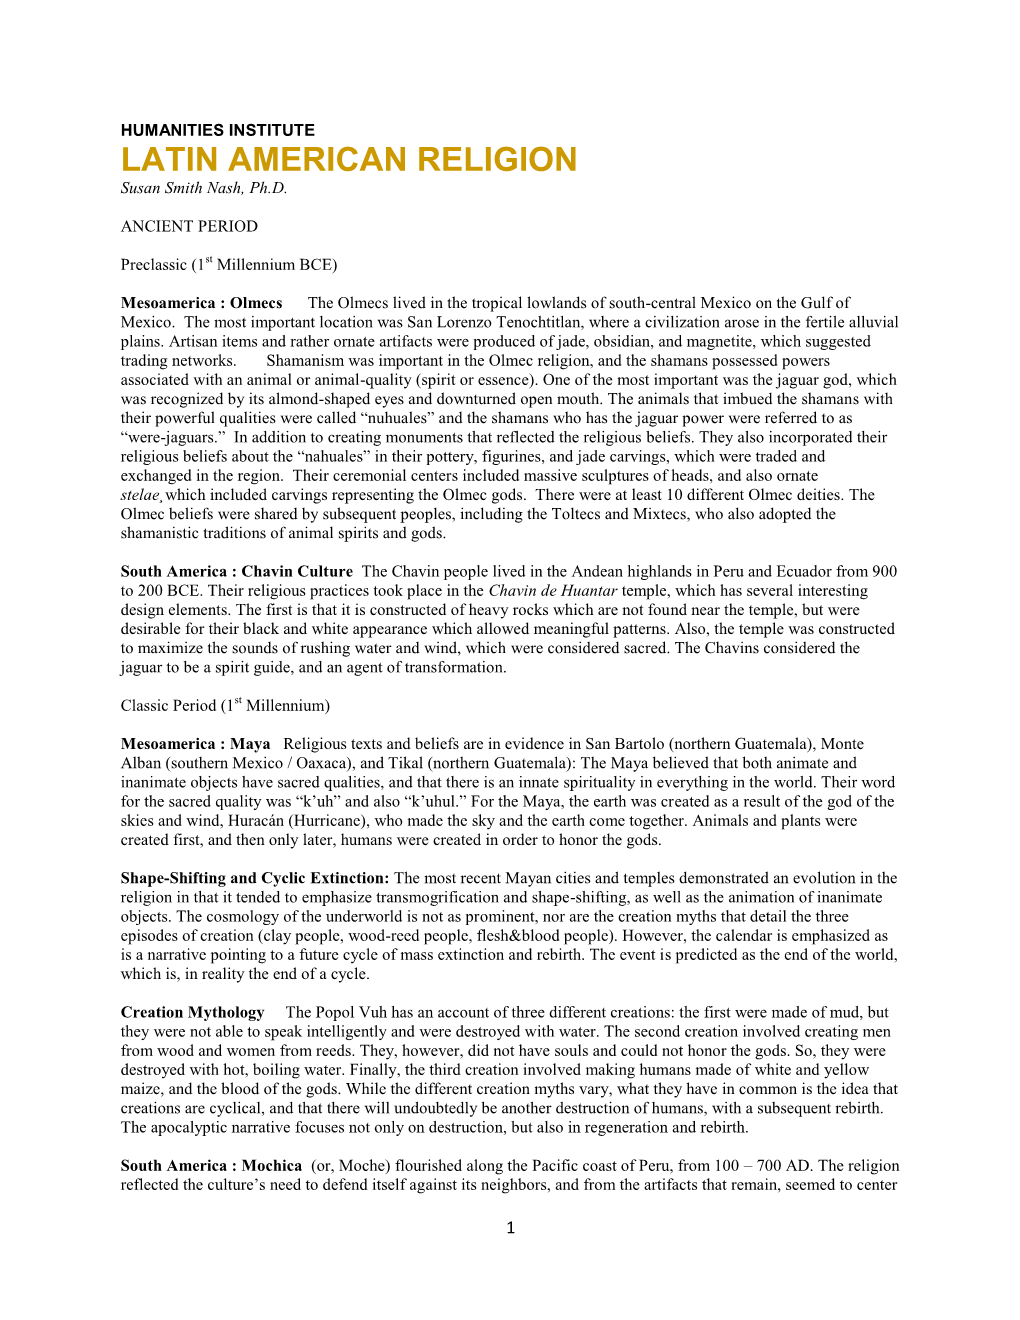 LATIN AMERICAN RELIGION Susan Smith Nash, Ph.D